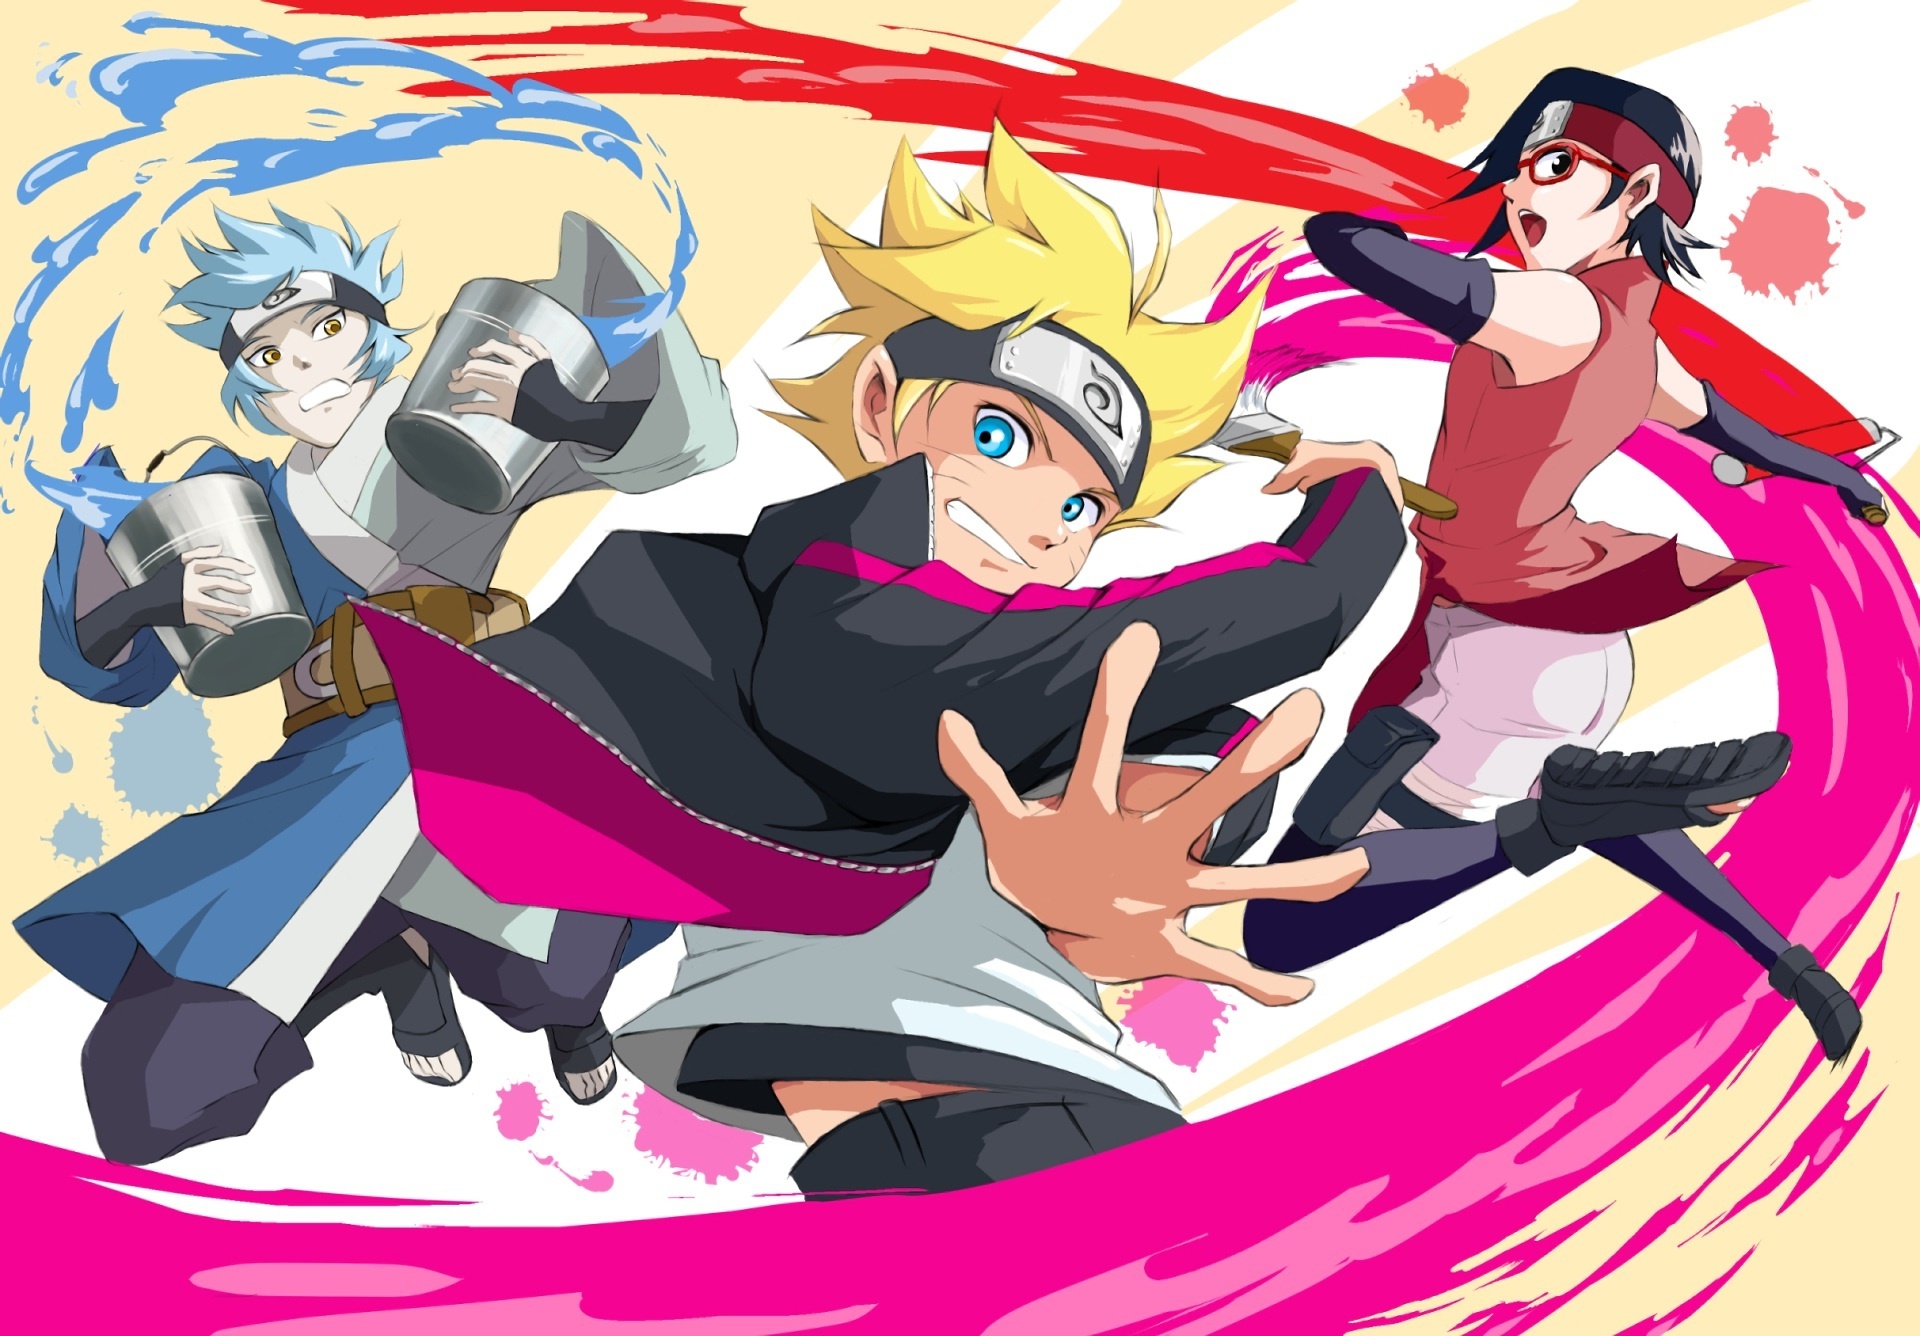 Wallpaper Boruto: Naruto the Movie, Sarada, Boruto, Mitsuki, Team  konokhomaru for mobile and desktop, section прочее, resolution 1920x1200 -  download